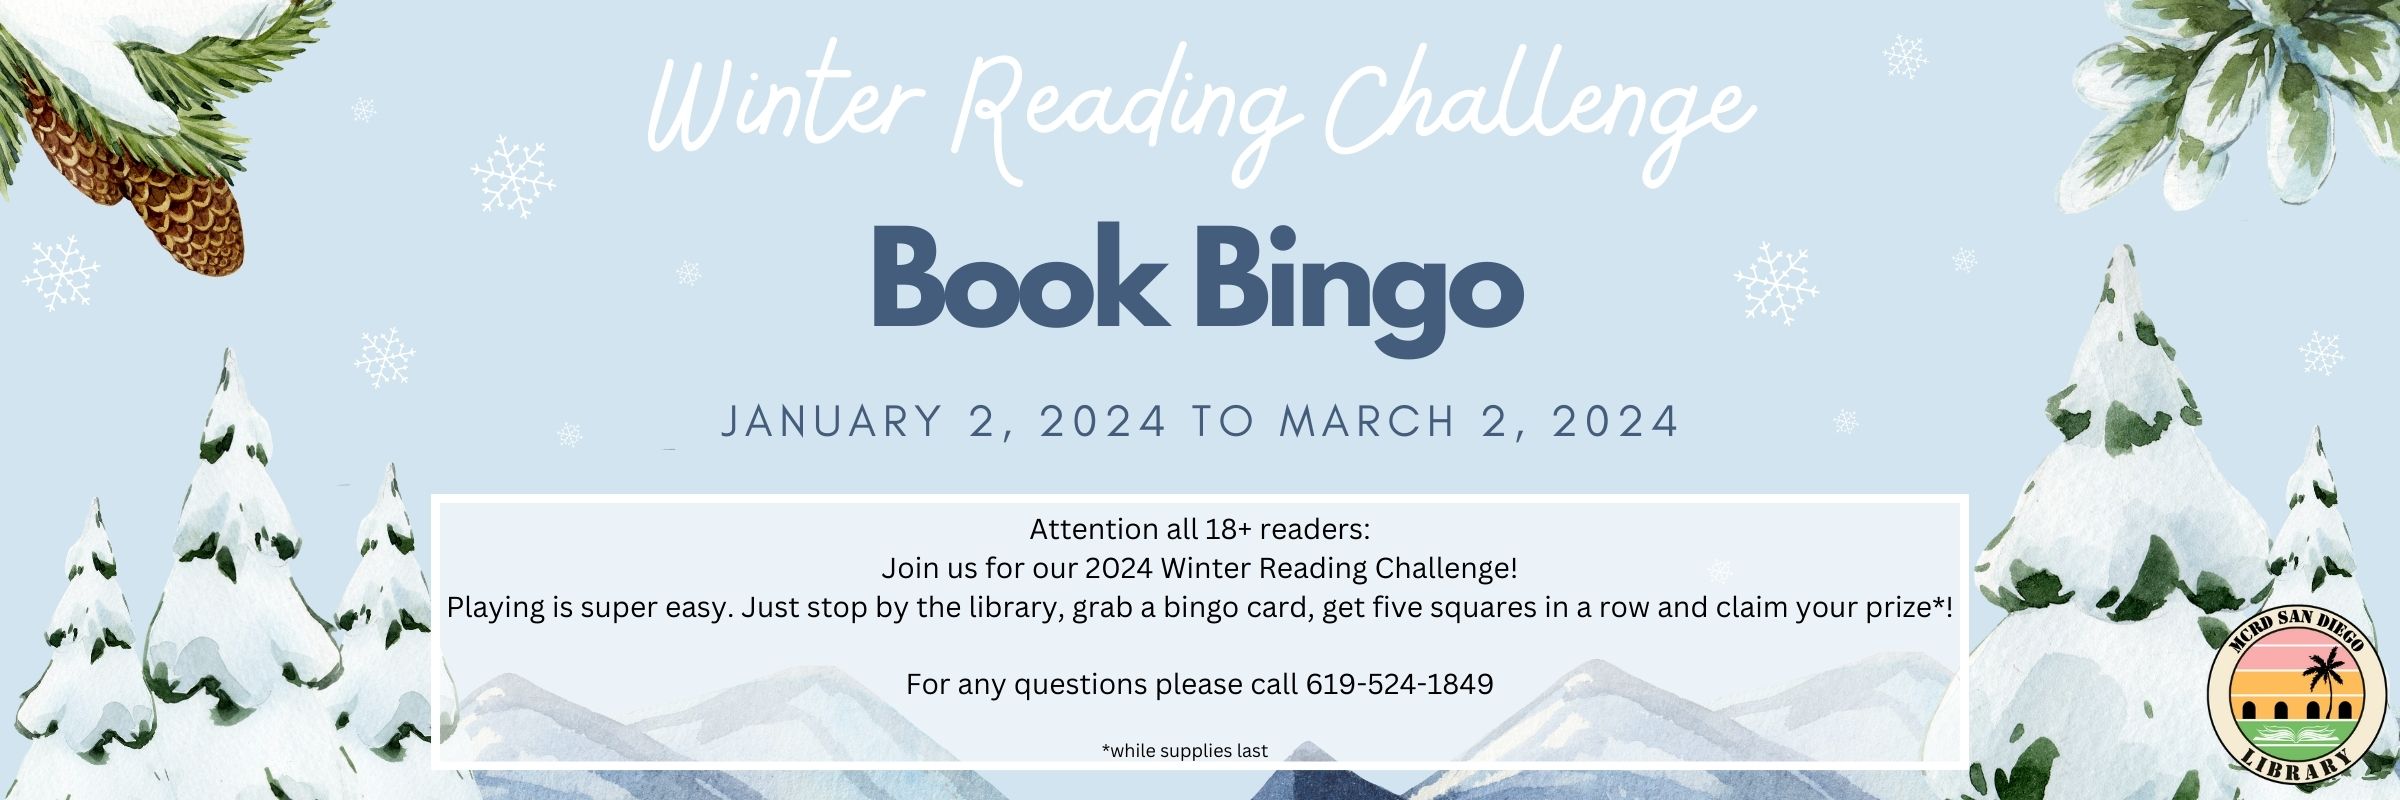 Website Banner - 2024 Winter Reading Challenge.jpg